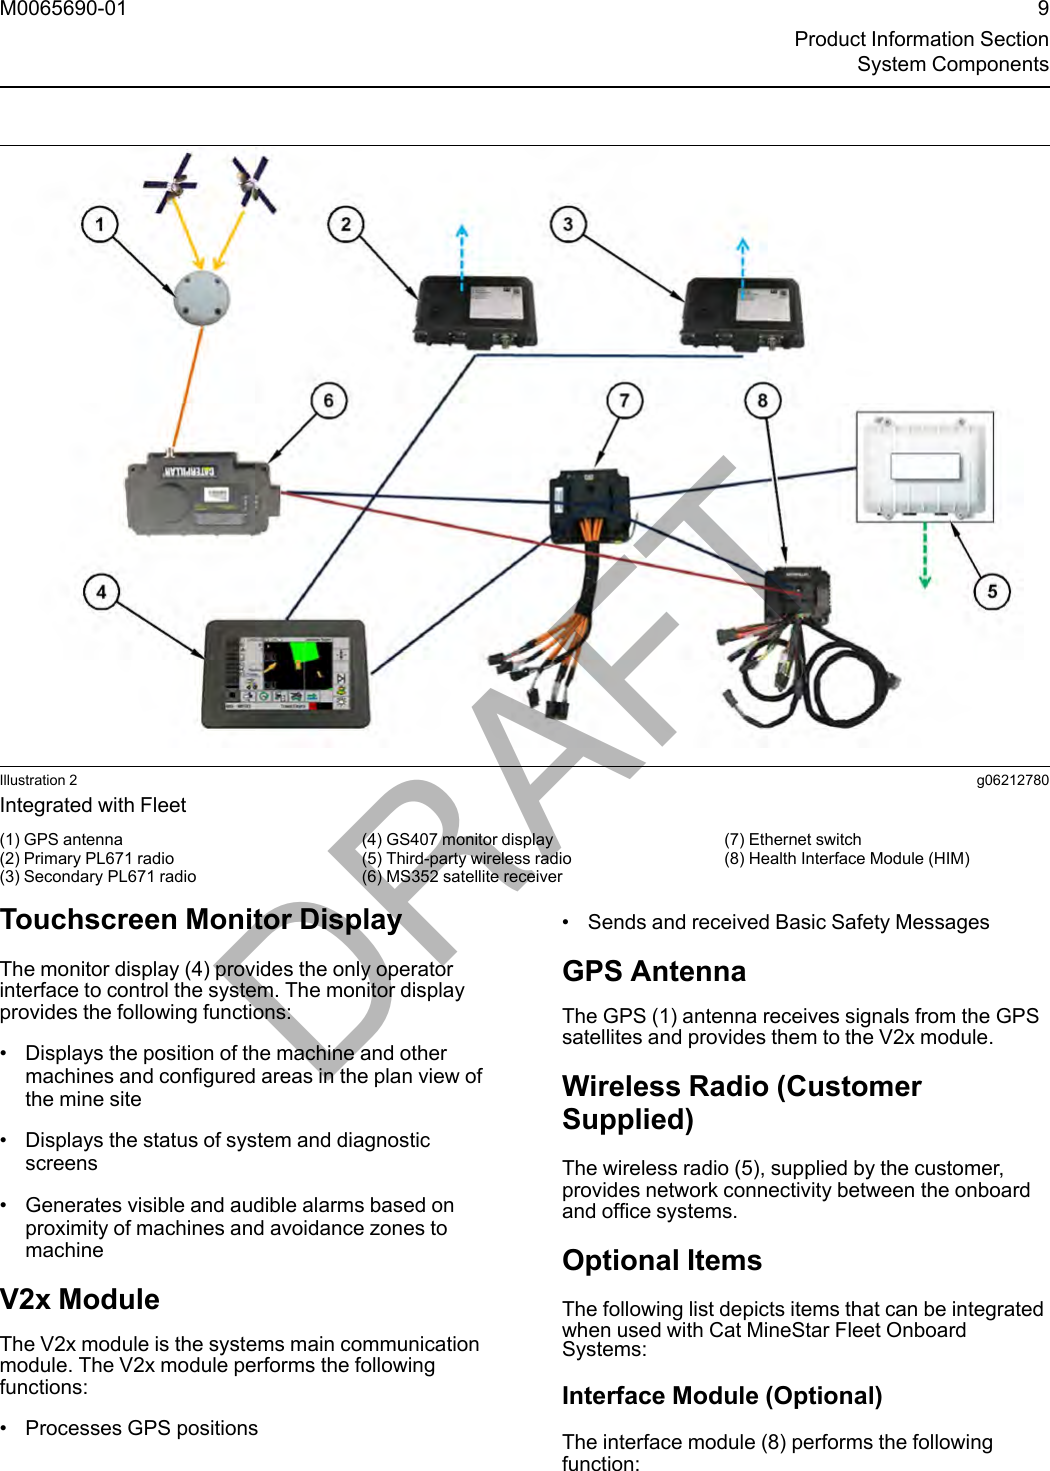 Page 9 of Caterpillar PL671 Digital Transmission System User Manual 